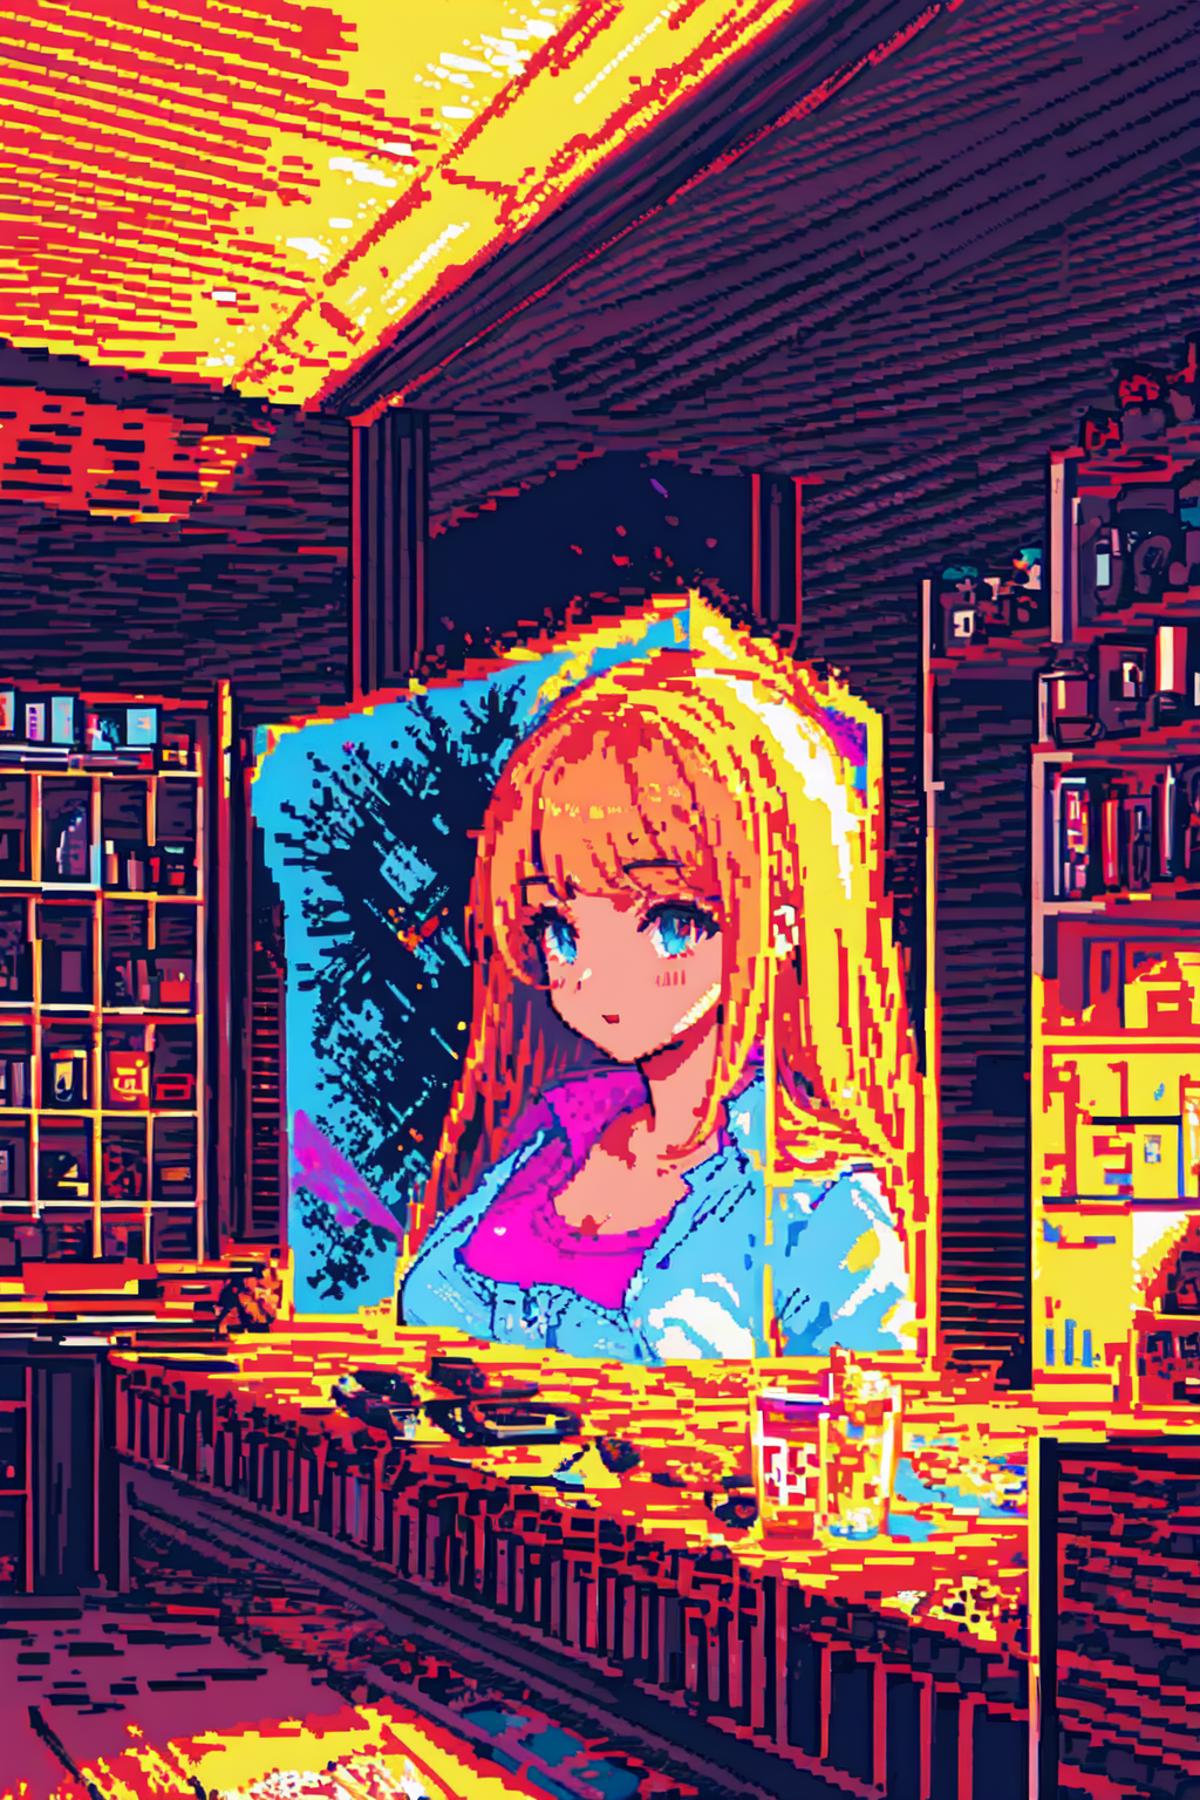 Pixel art style image by Junbegun